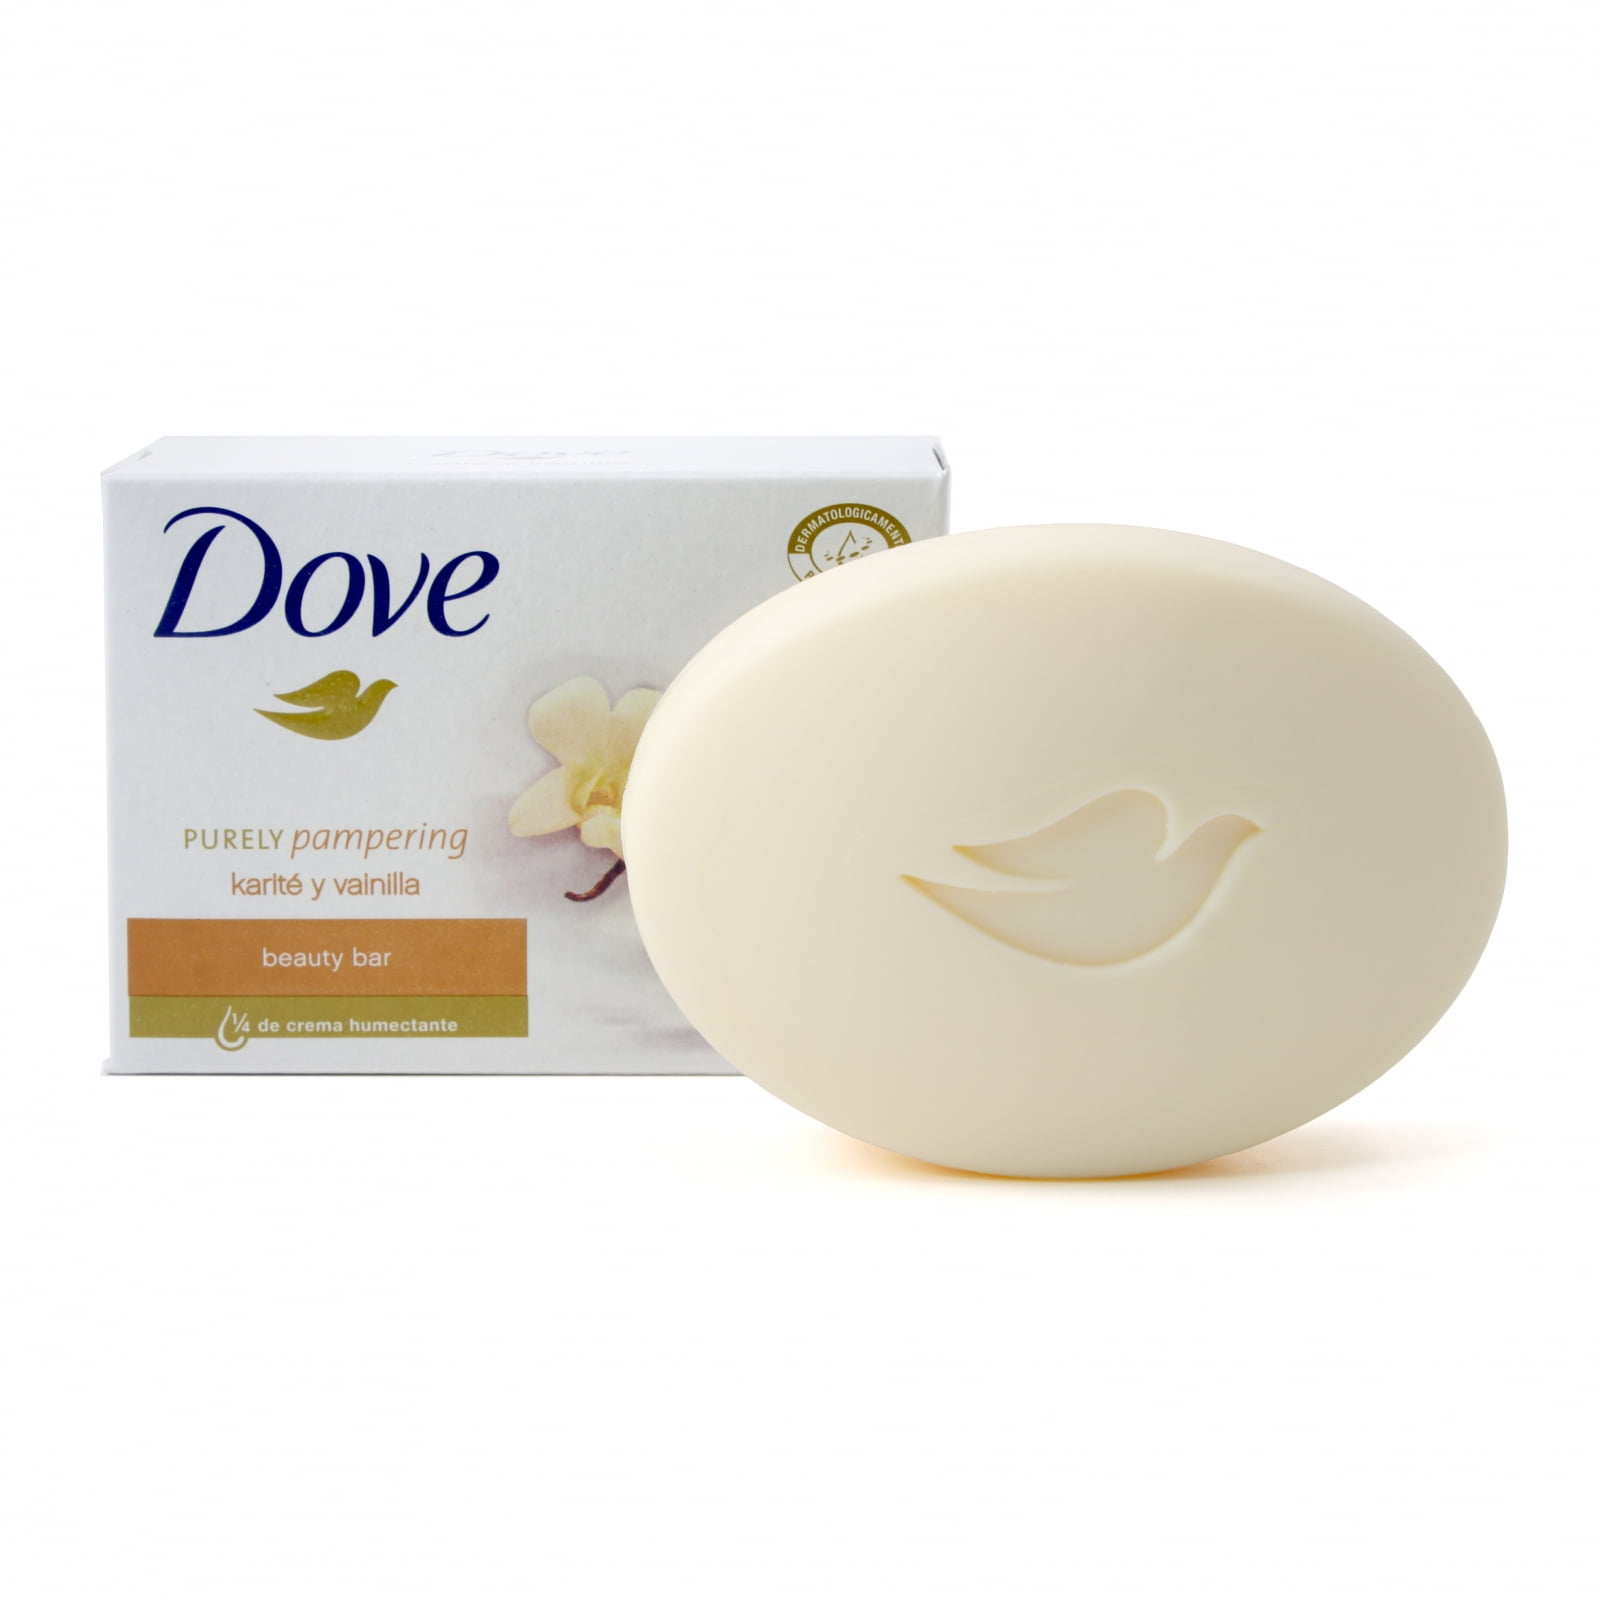 Dove Shea Butter Beauty Cream Moisturizing Bar Soap with Vanilla Scent